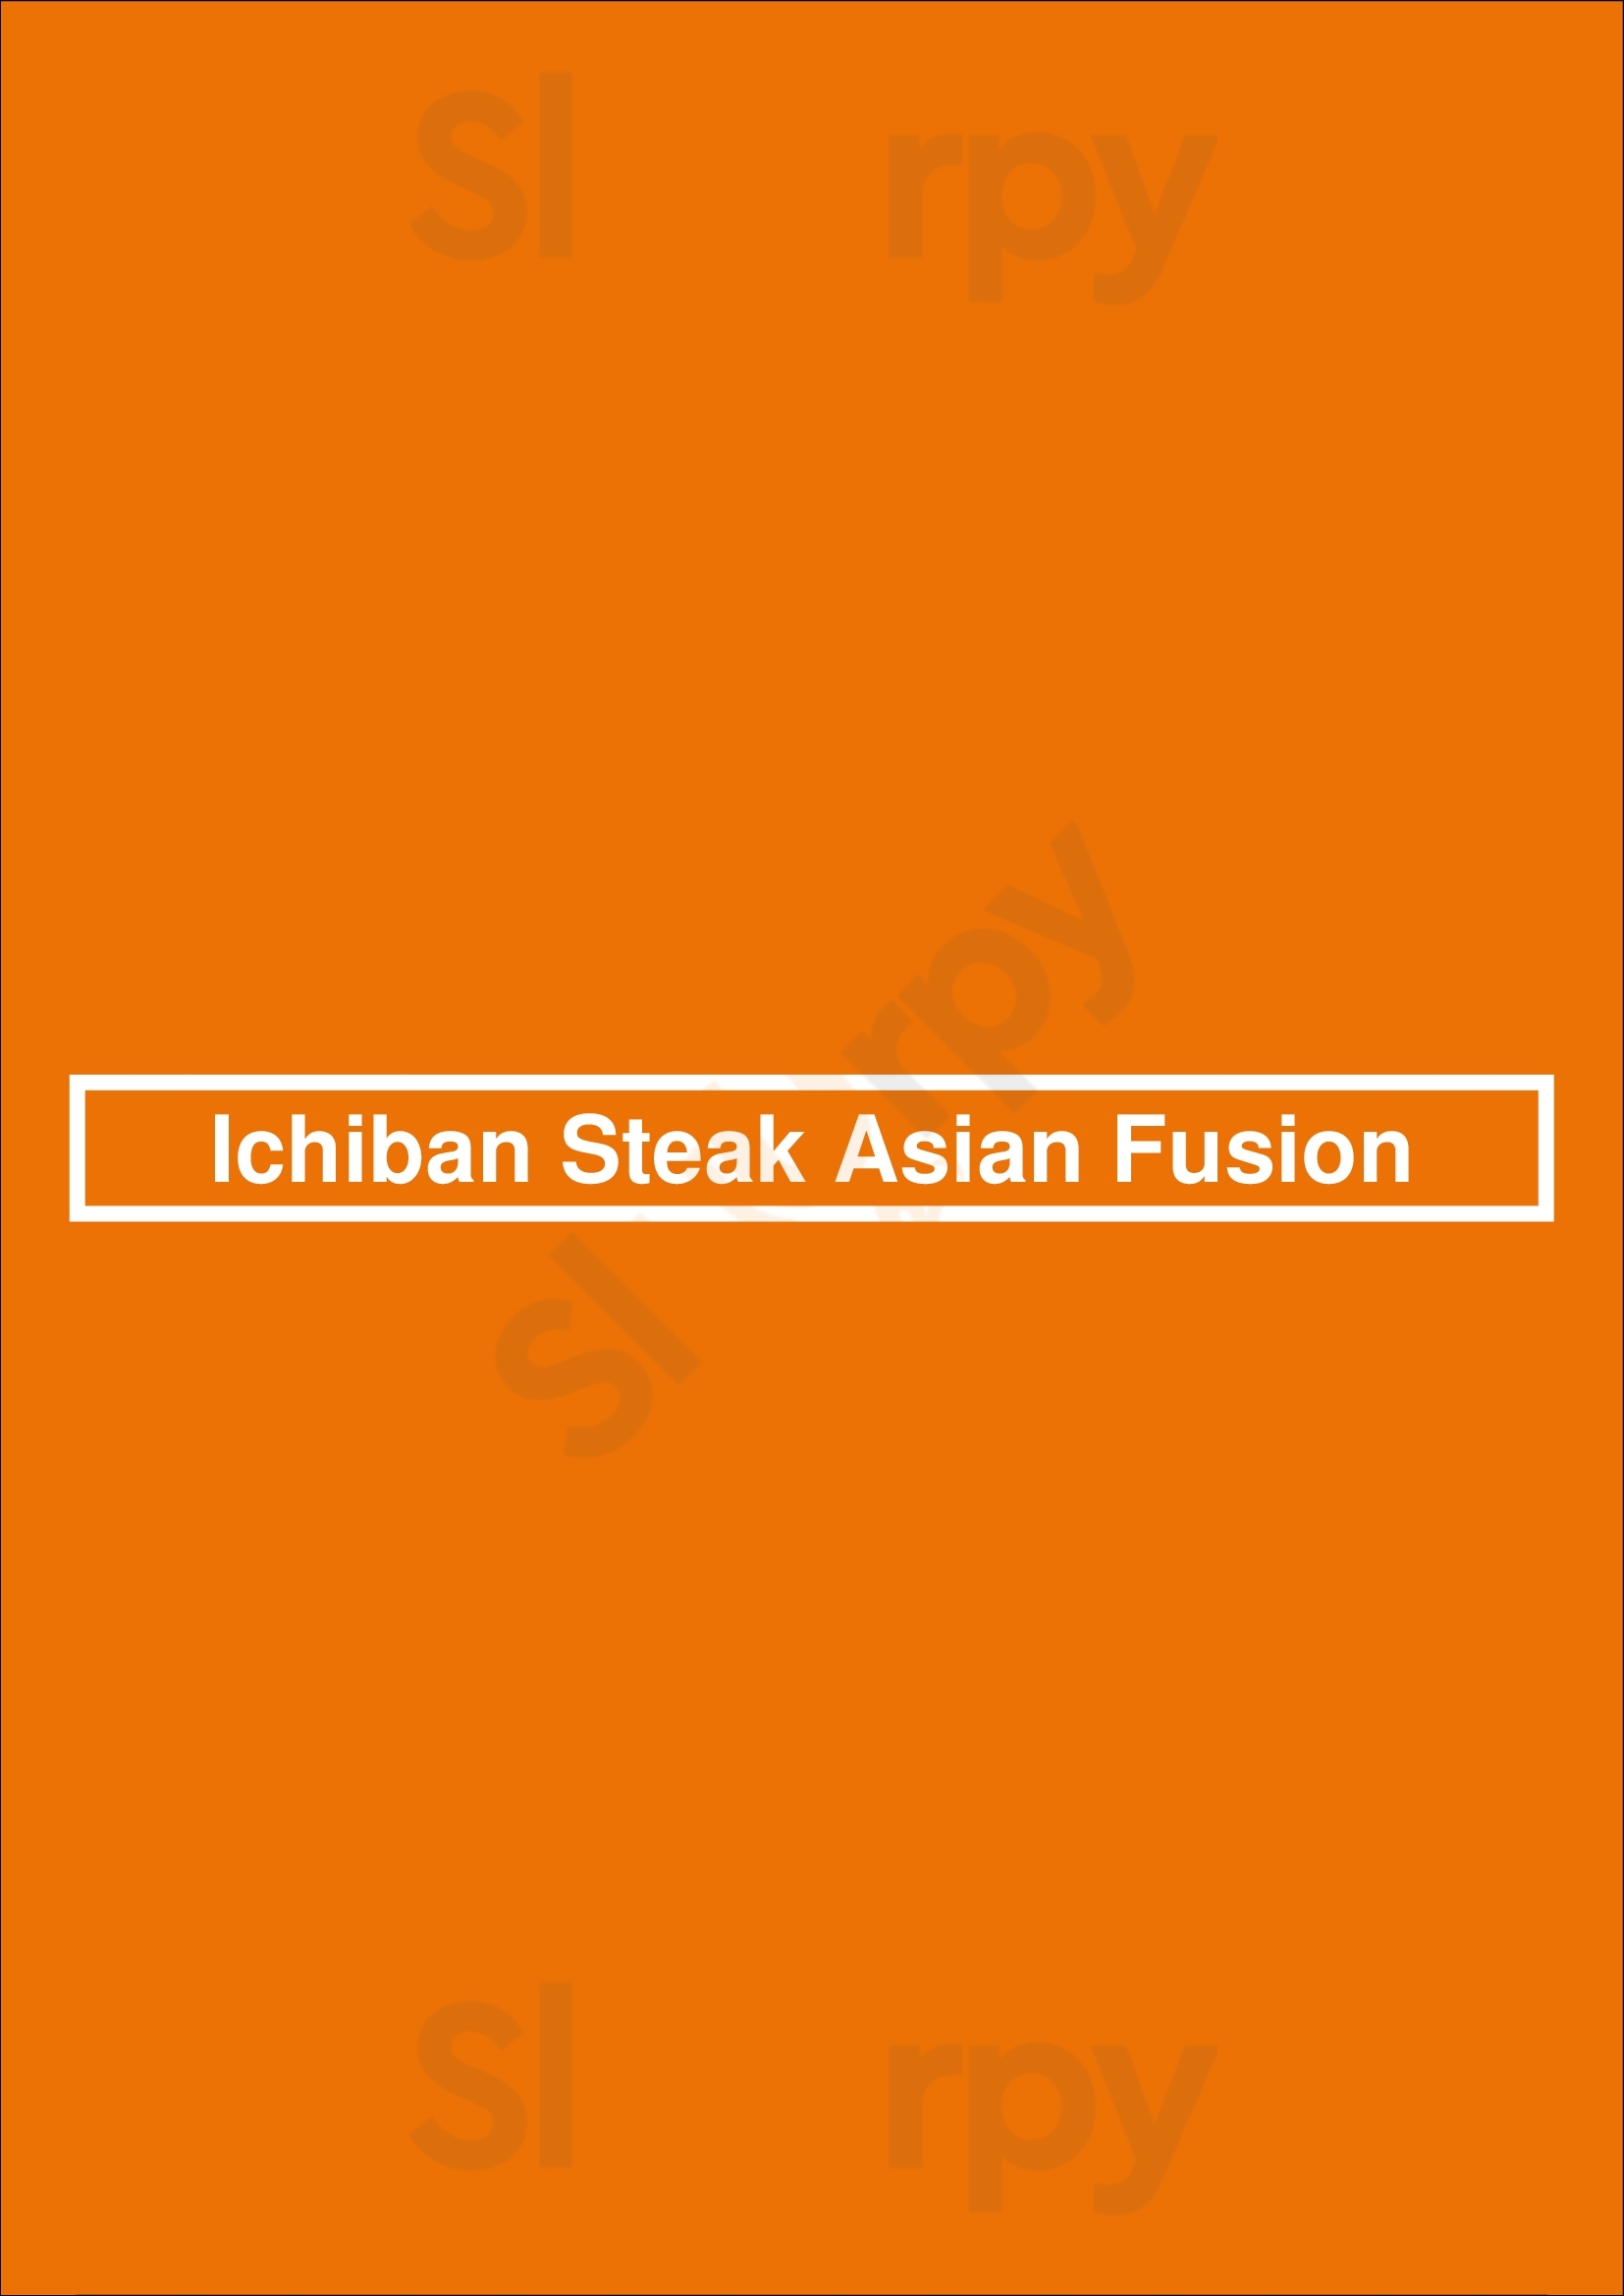 Ichiban Steak Asian Fusion San Antonio Menu - 1